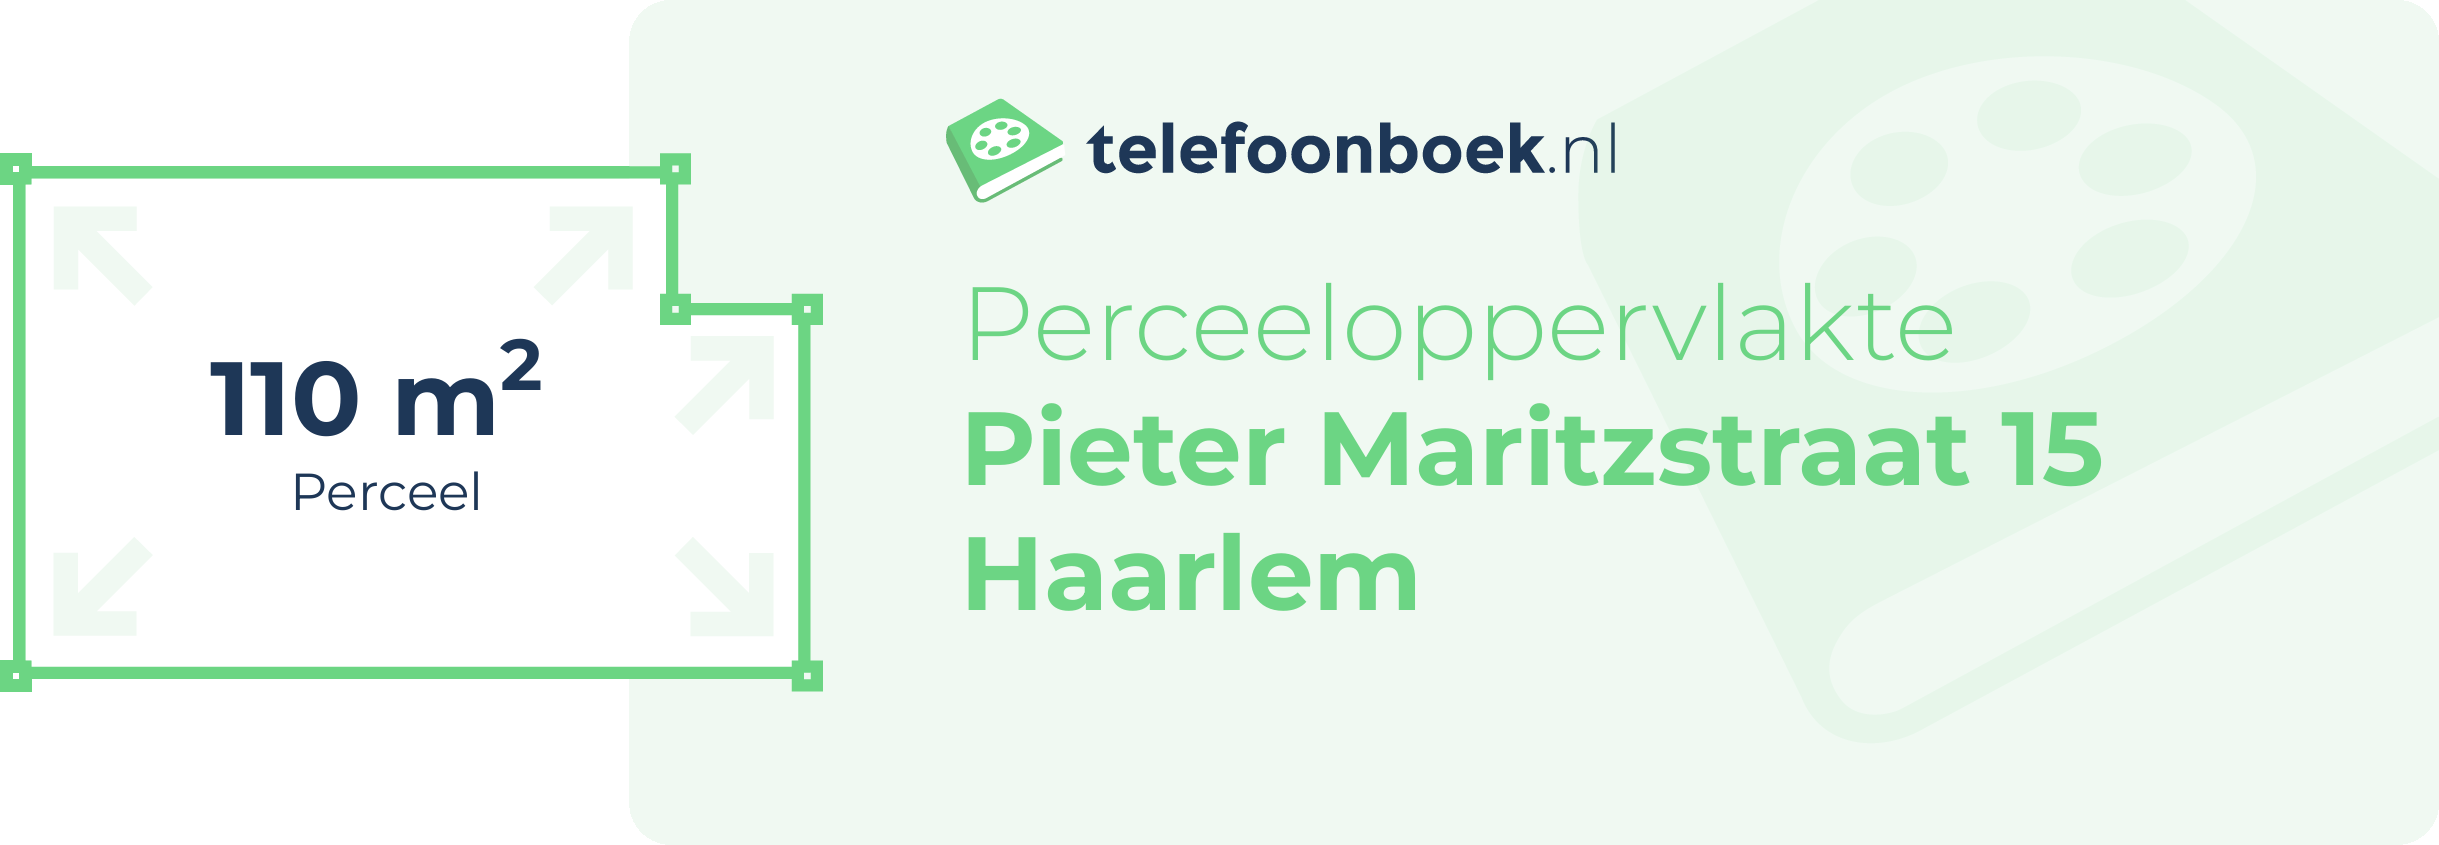 Perceeloppervlakte Pieter Maritzstraat 15 Haarlem